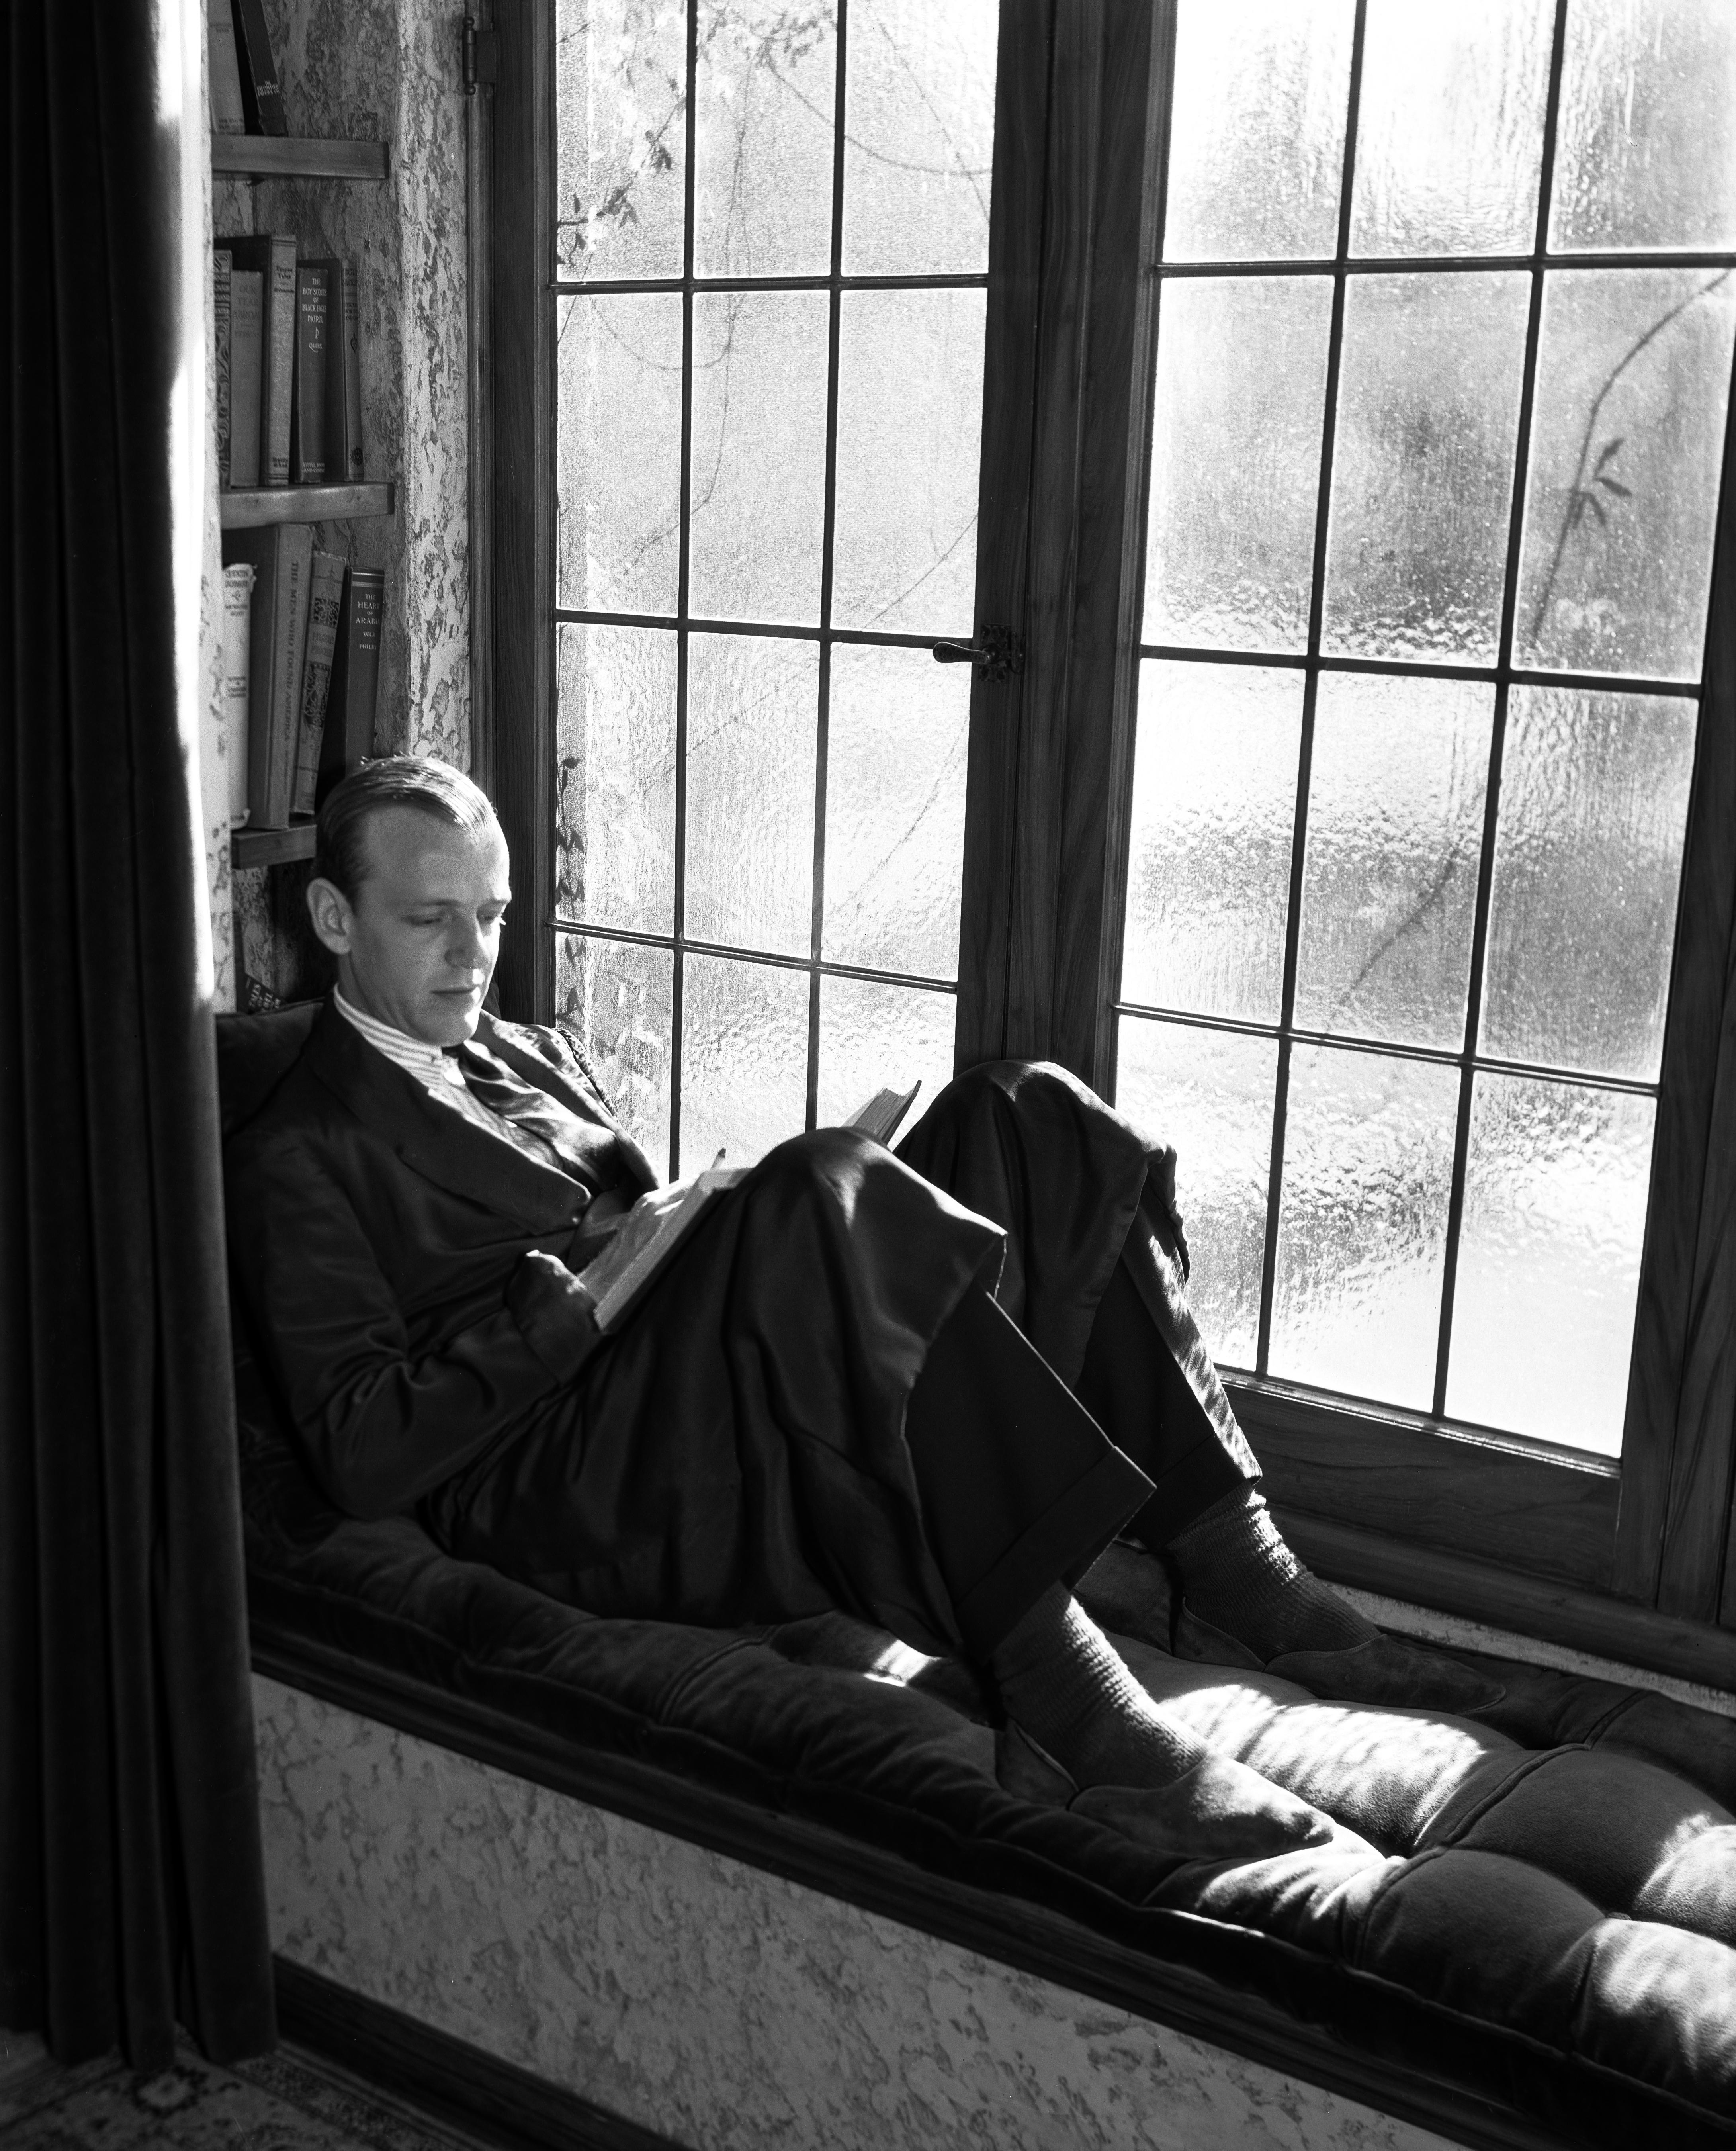 Unknown Portrait Photograph - Fred Astaire Sitting in Window Movie Star News Fine Art Print